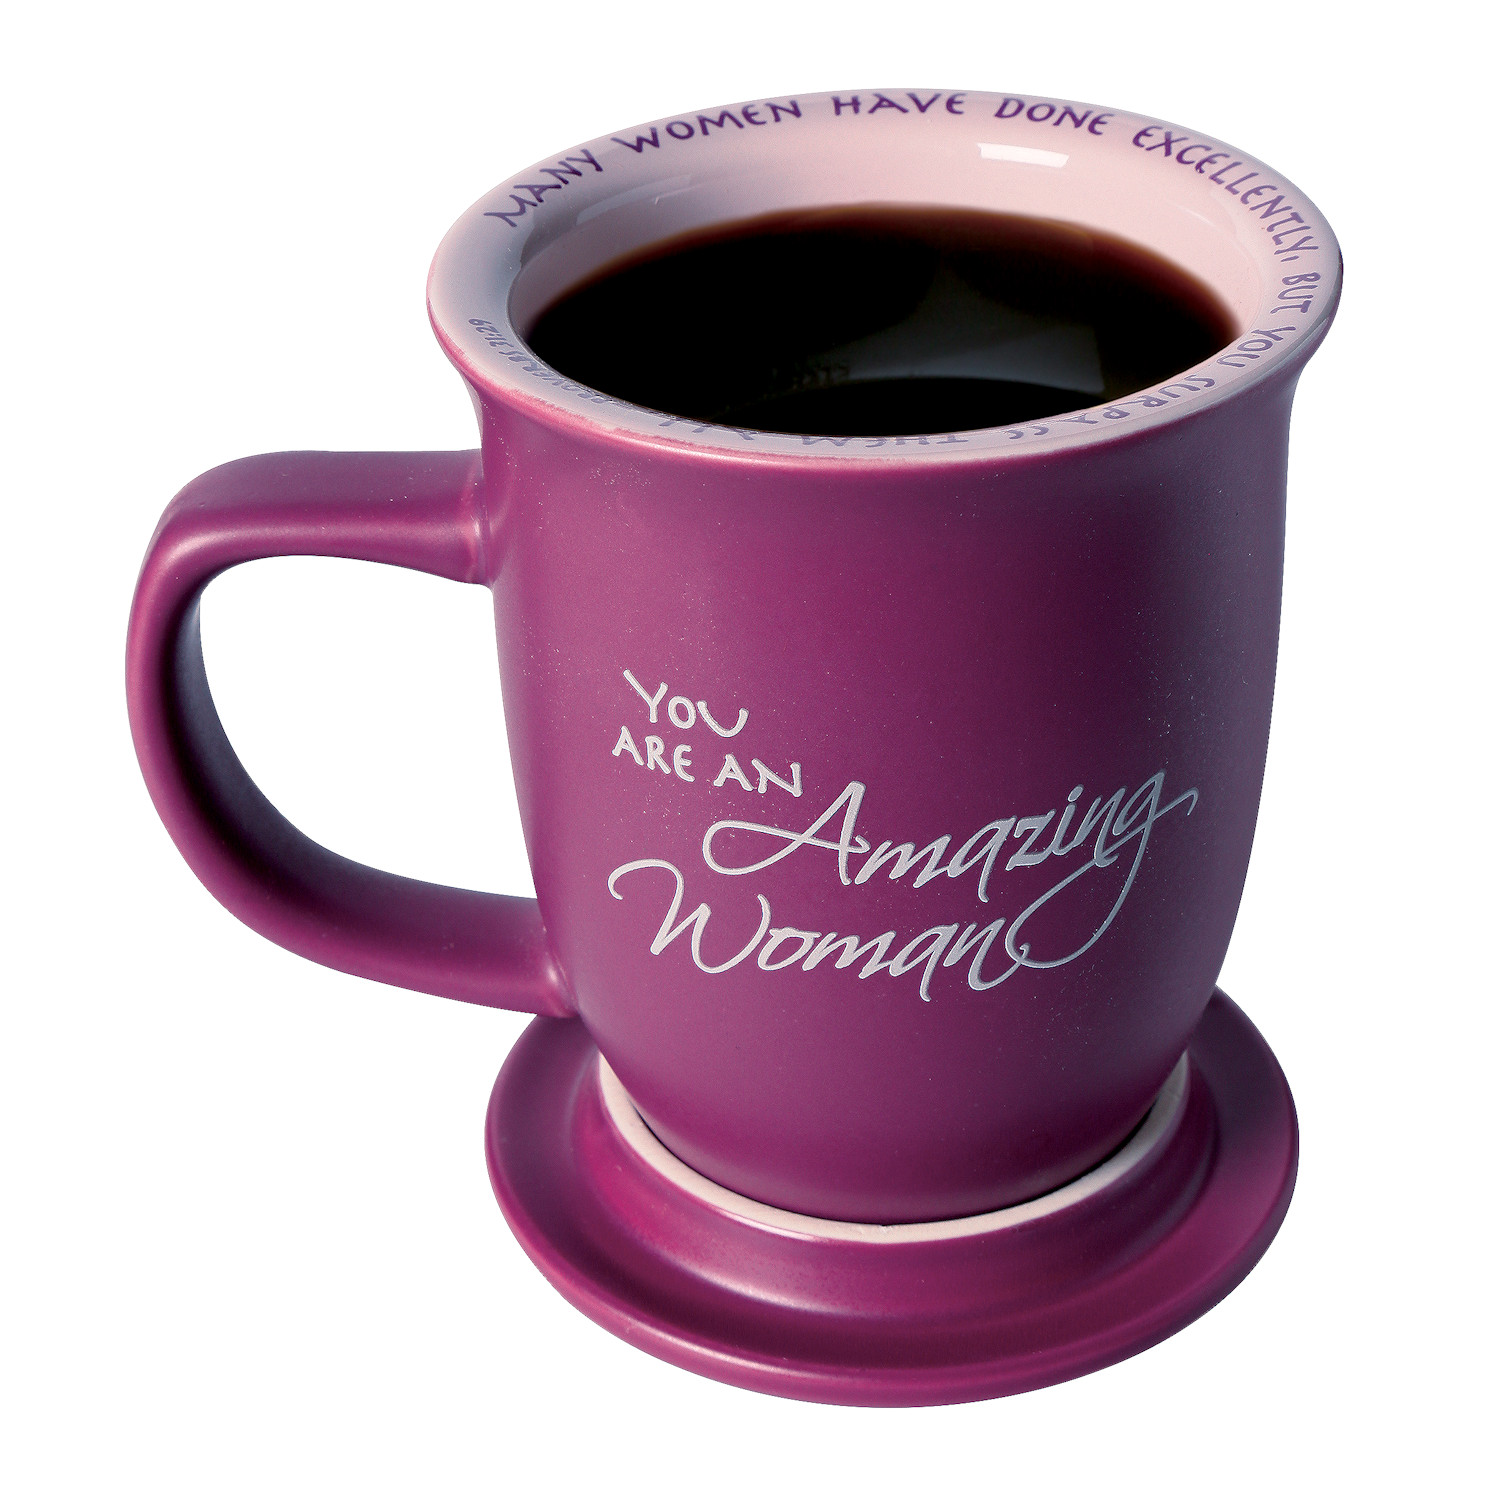 Amazing Woman Ceramic Mug Andcoaster Lid 14 Ounce Coffee Tea Cup